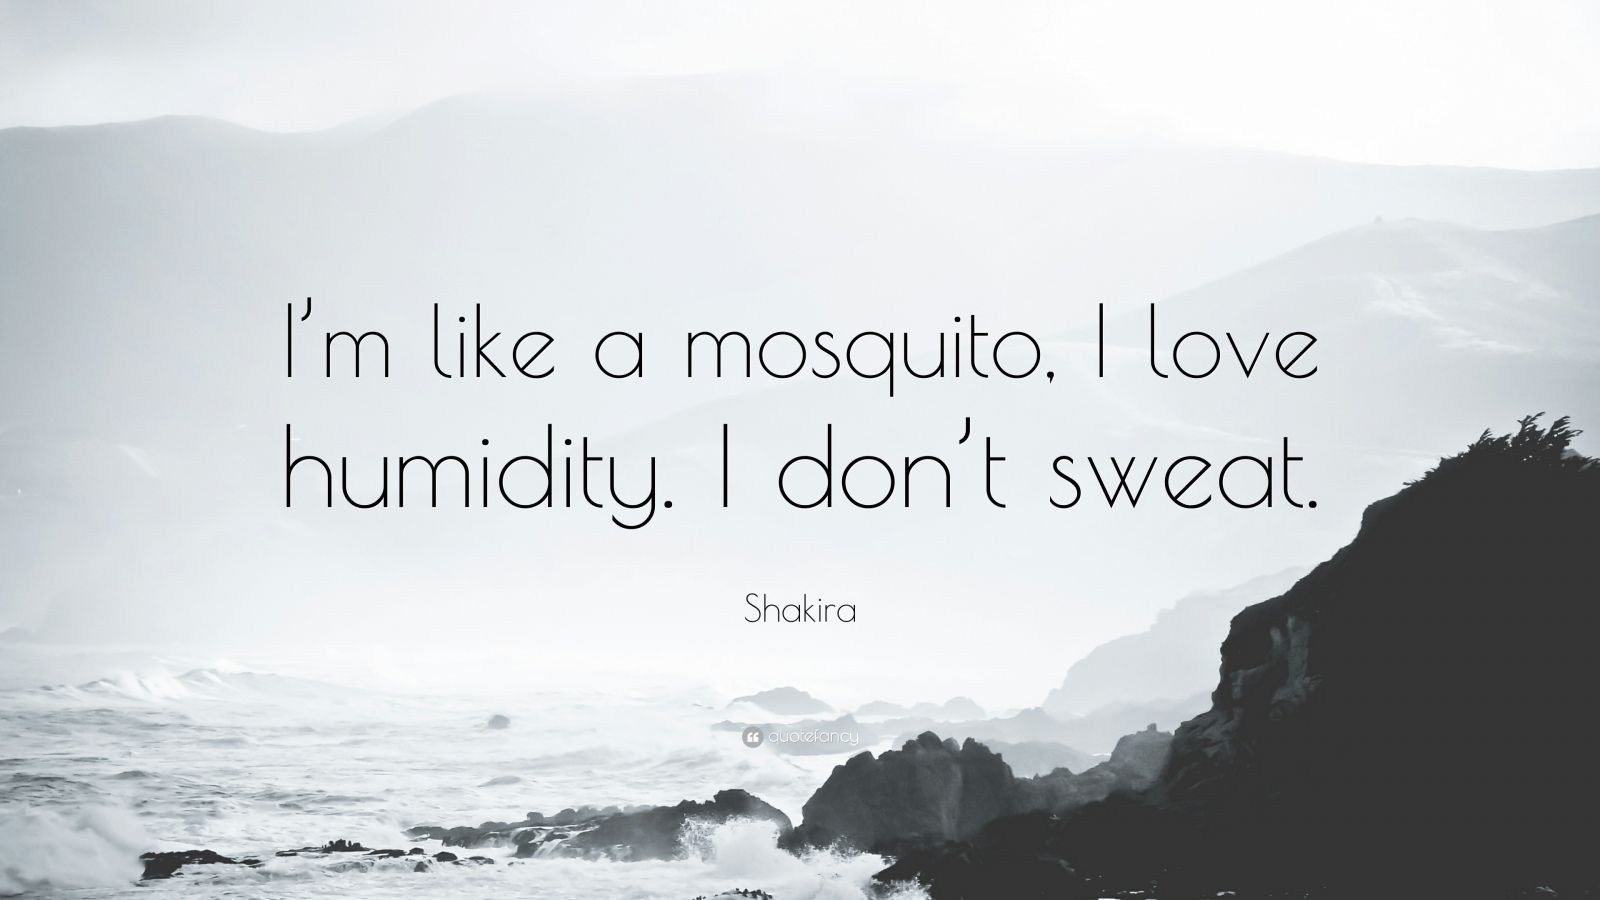 Shakira Quote “I m like a mosquito I love humidity I